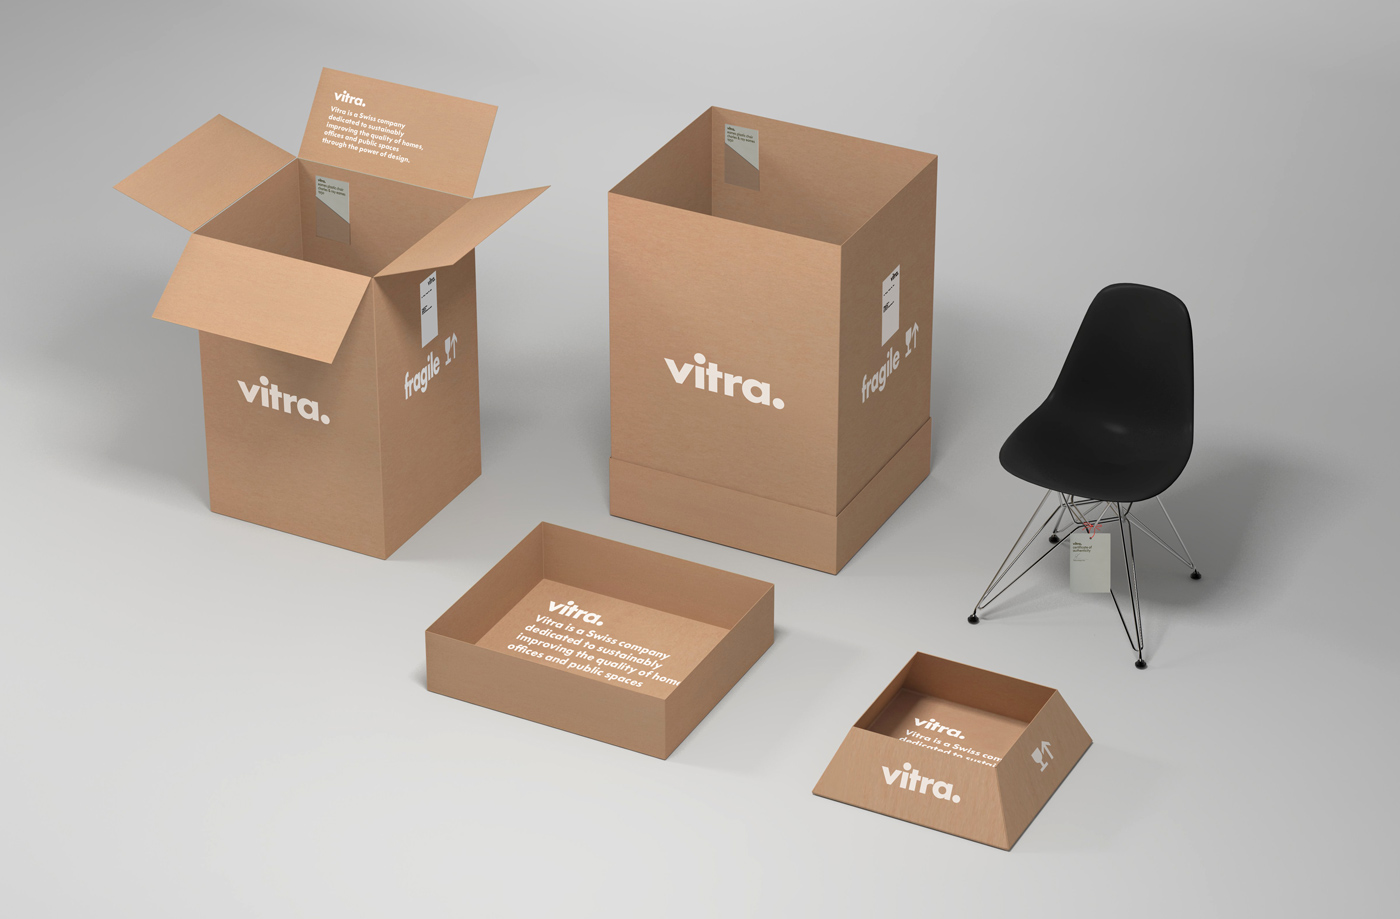 Package design for Vitra by Swedish design studio BVD